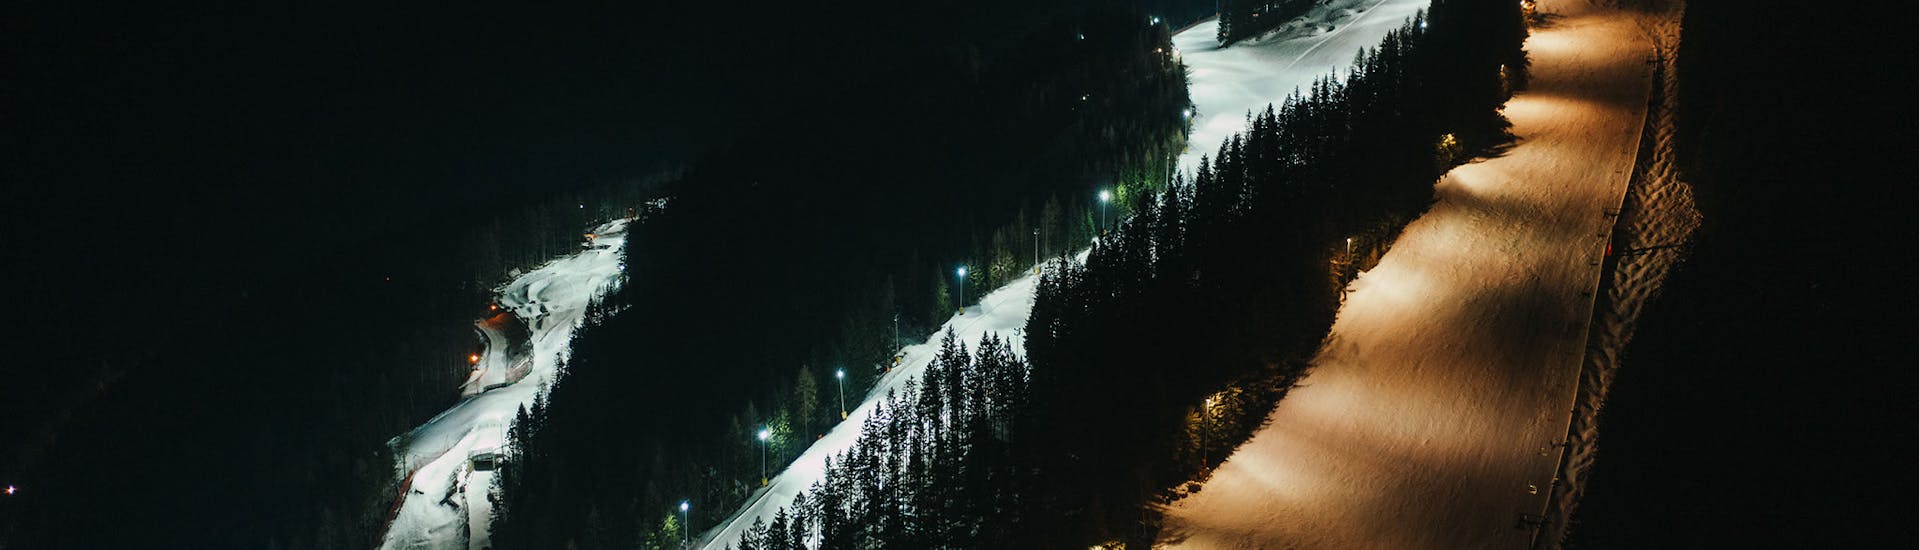 Clases de esquí privadas para adultos con experiencia con Schneesportschule Zauberberg Semmering.